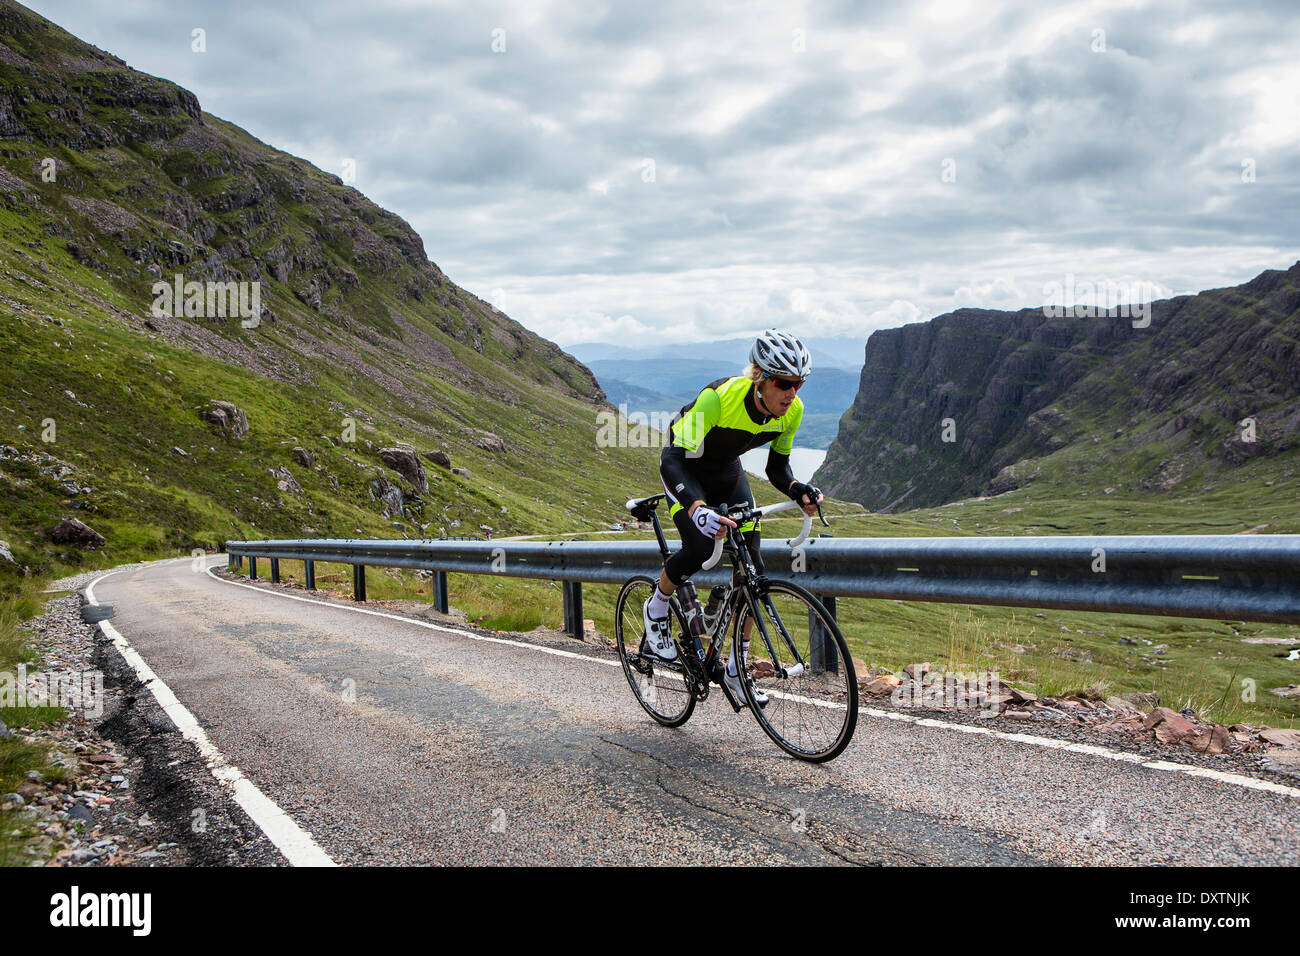 A cyclist takes on Britain's longest road climb in Lochcarron, Scotland Stock Photo